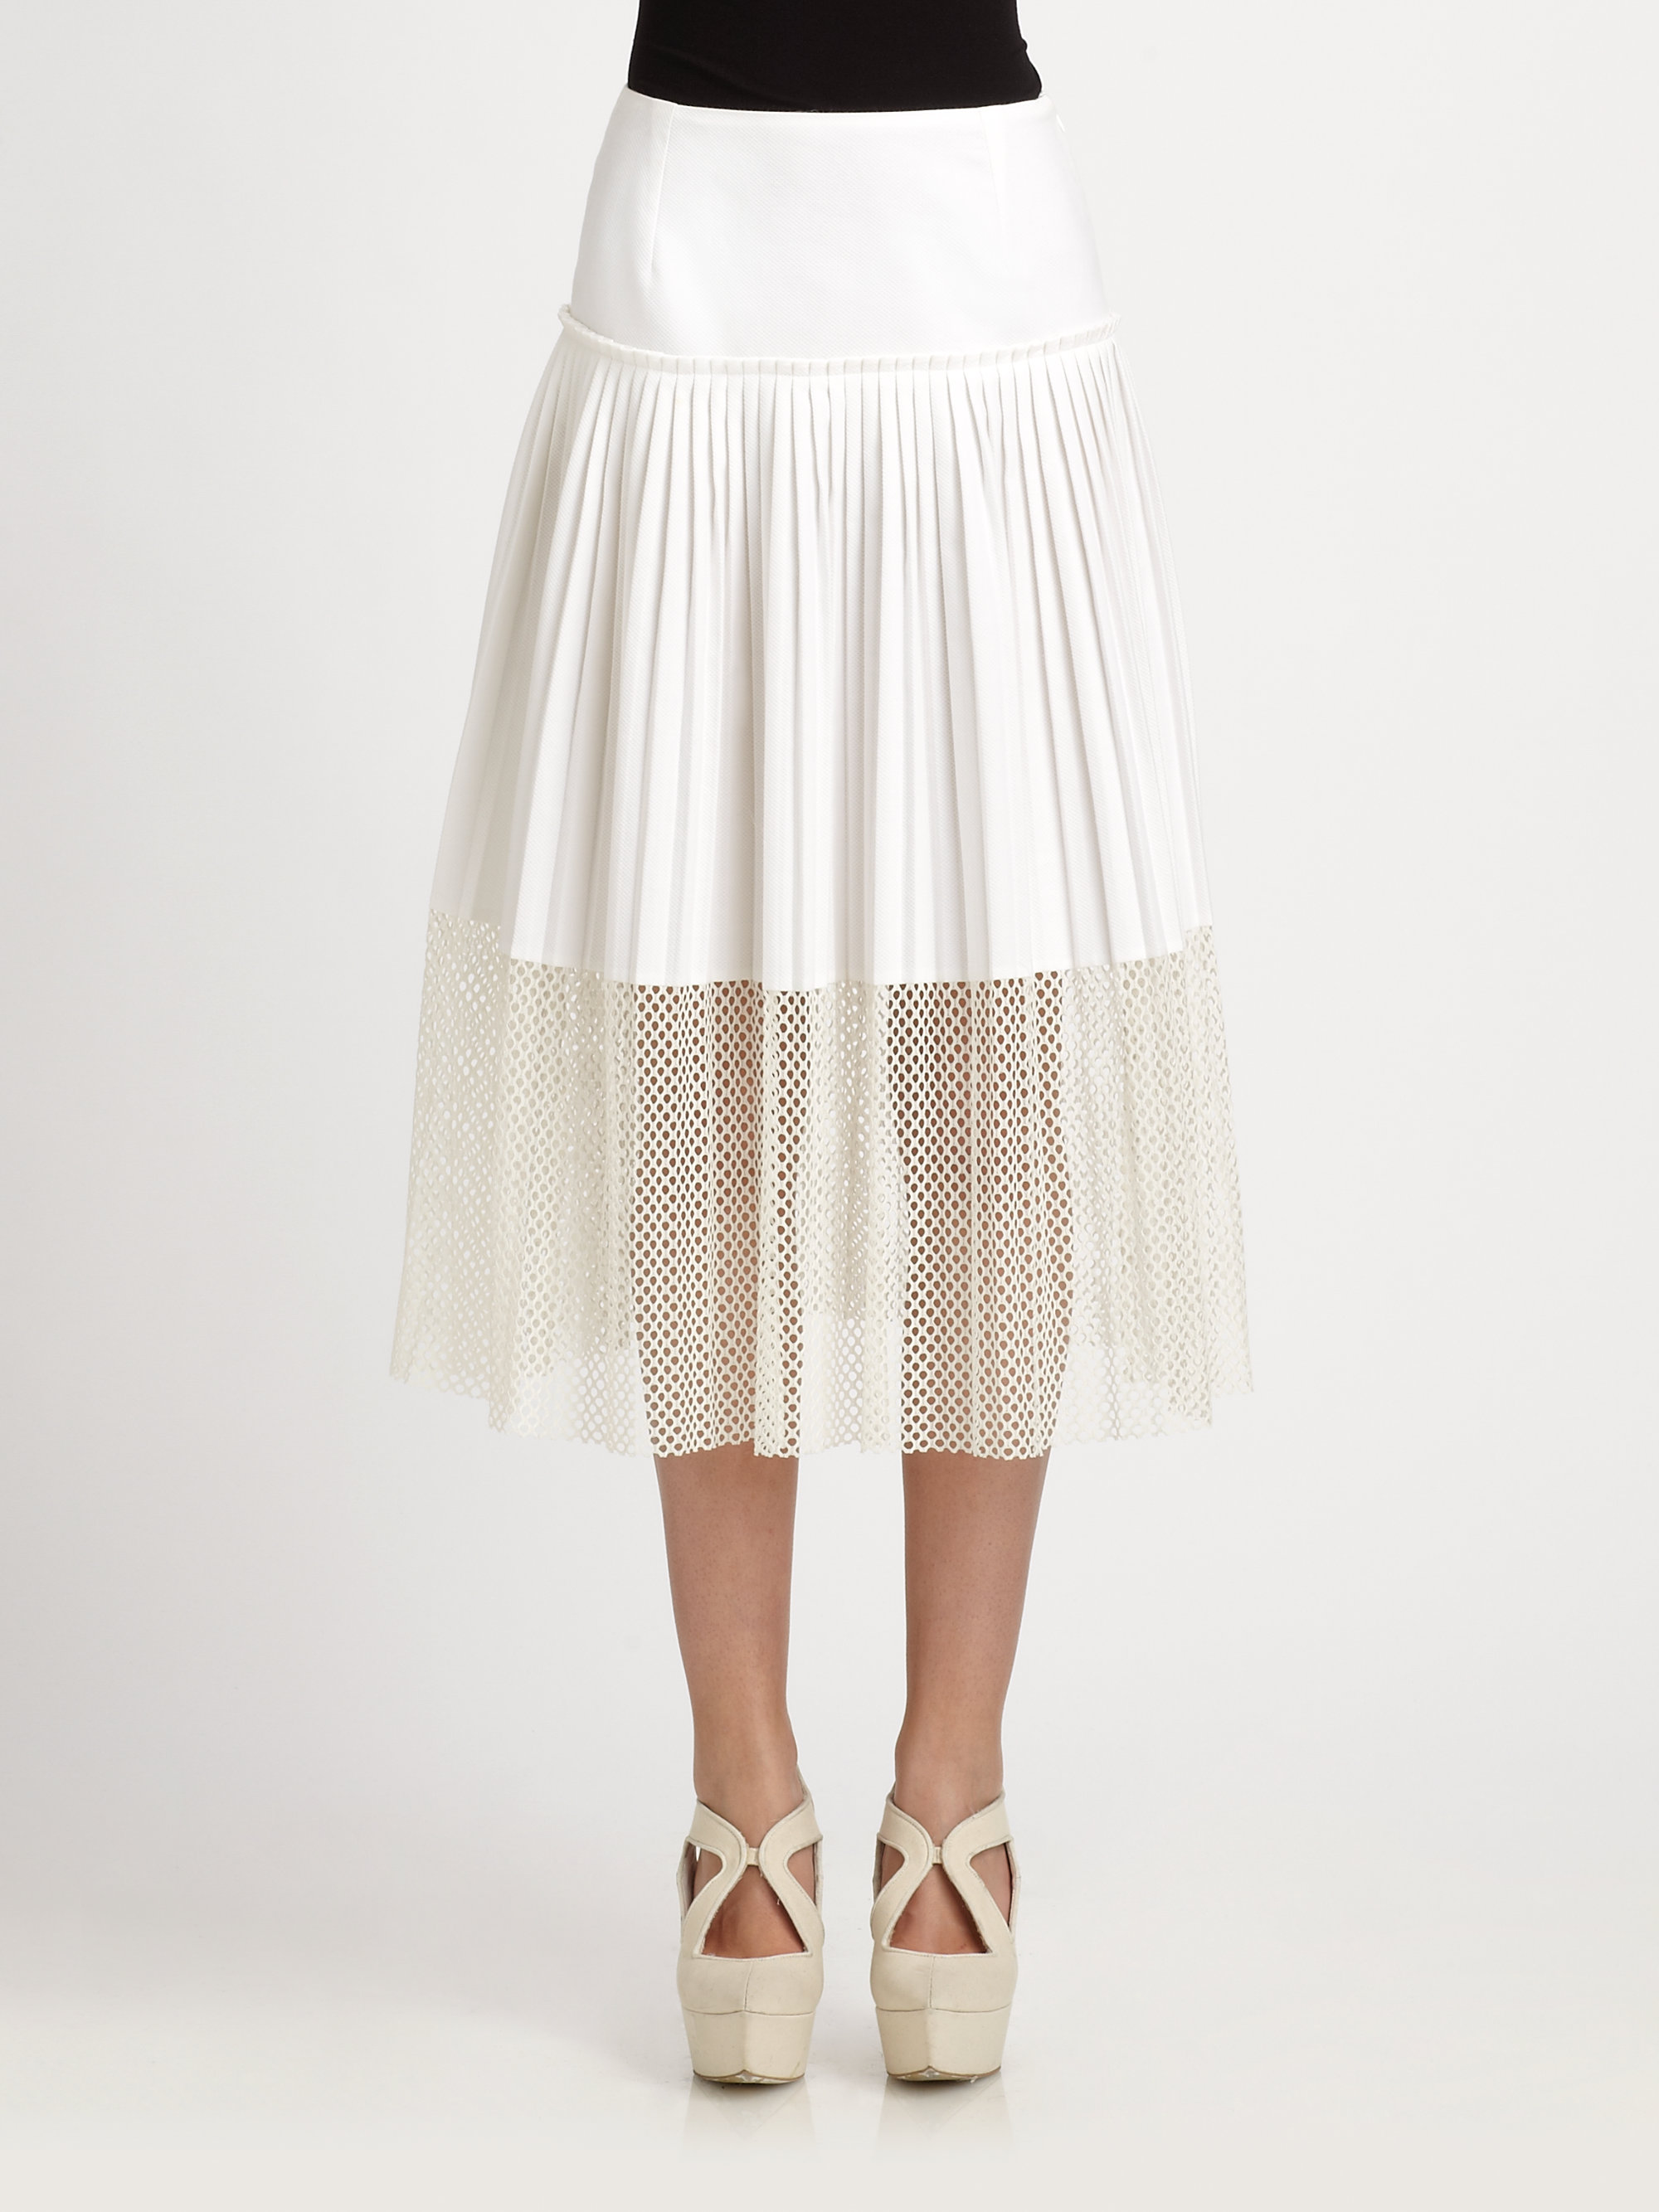 Stella mccartney Pleated Skirt in White | Lyst